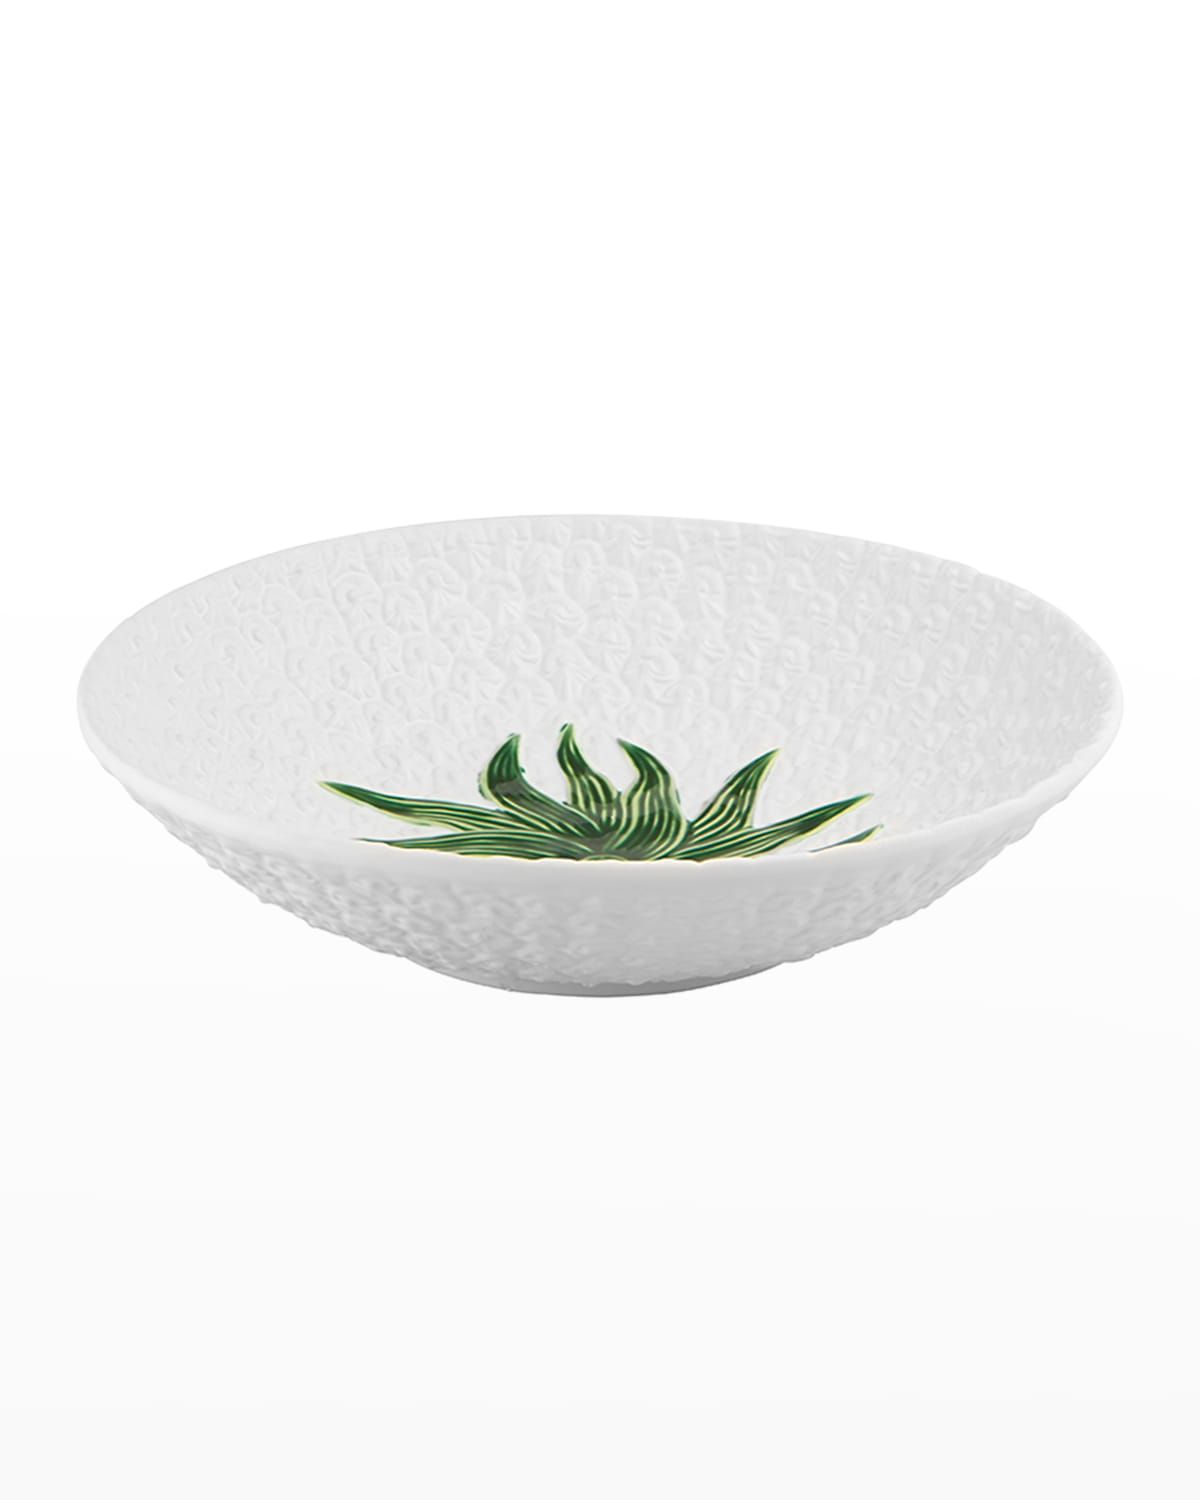 Pineapple Salad Bowl, White